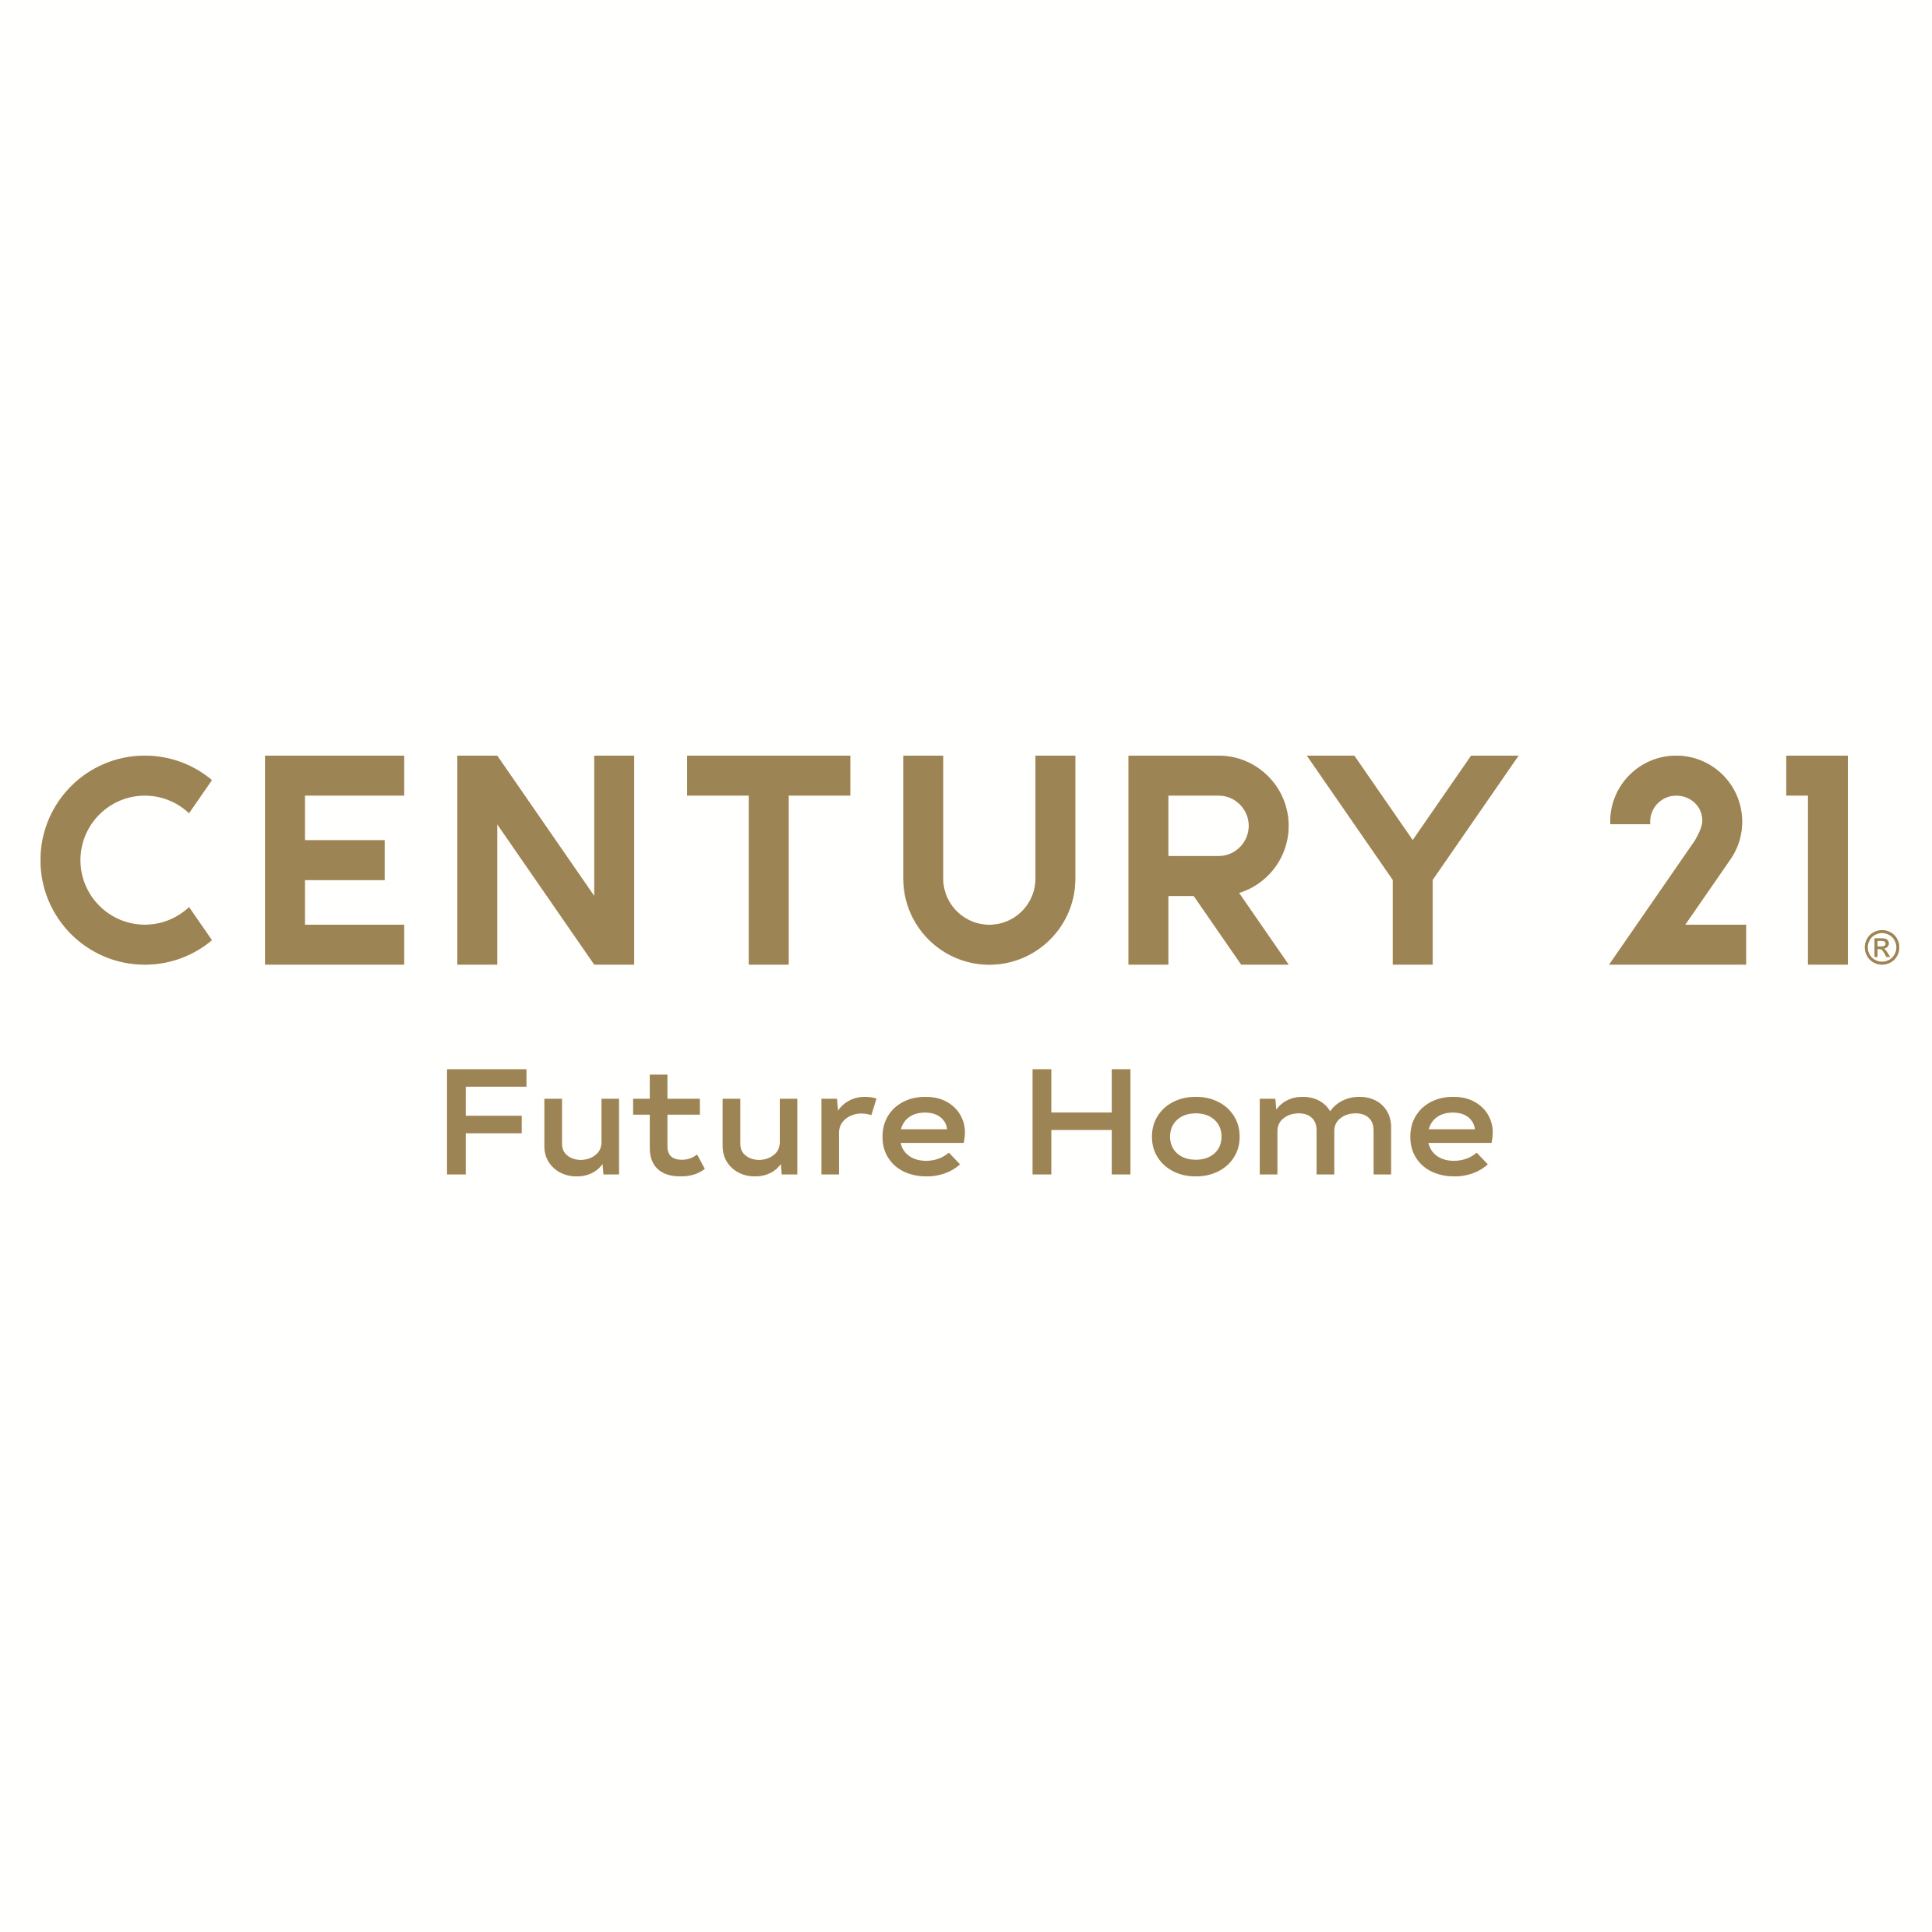 Century 21 Future Home